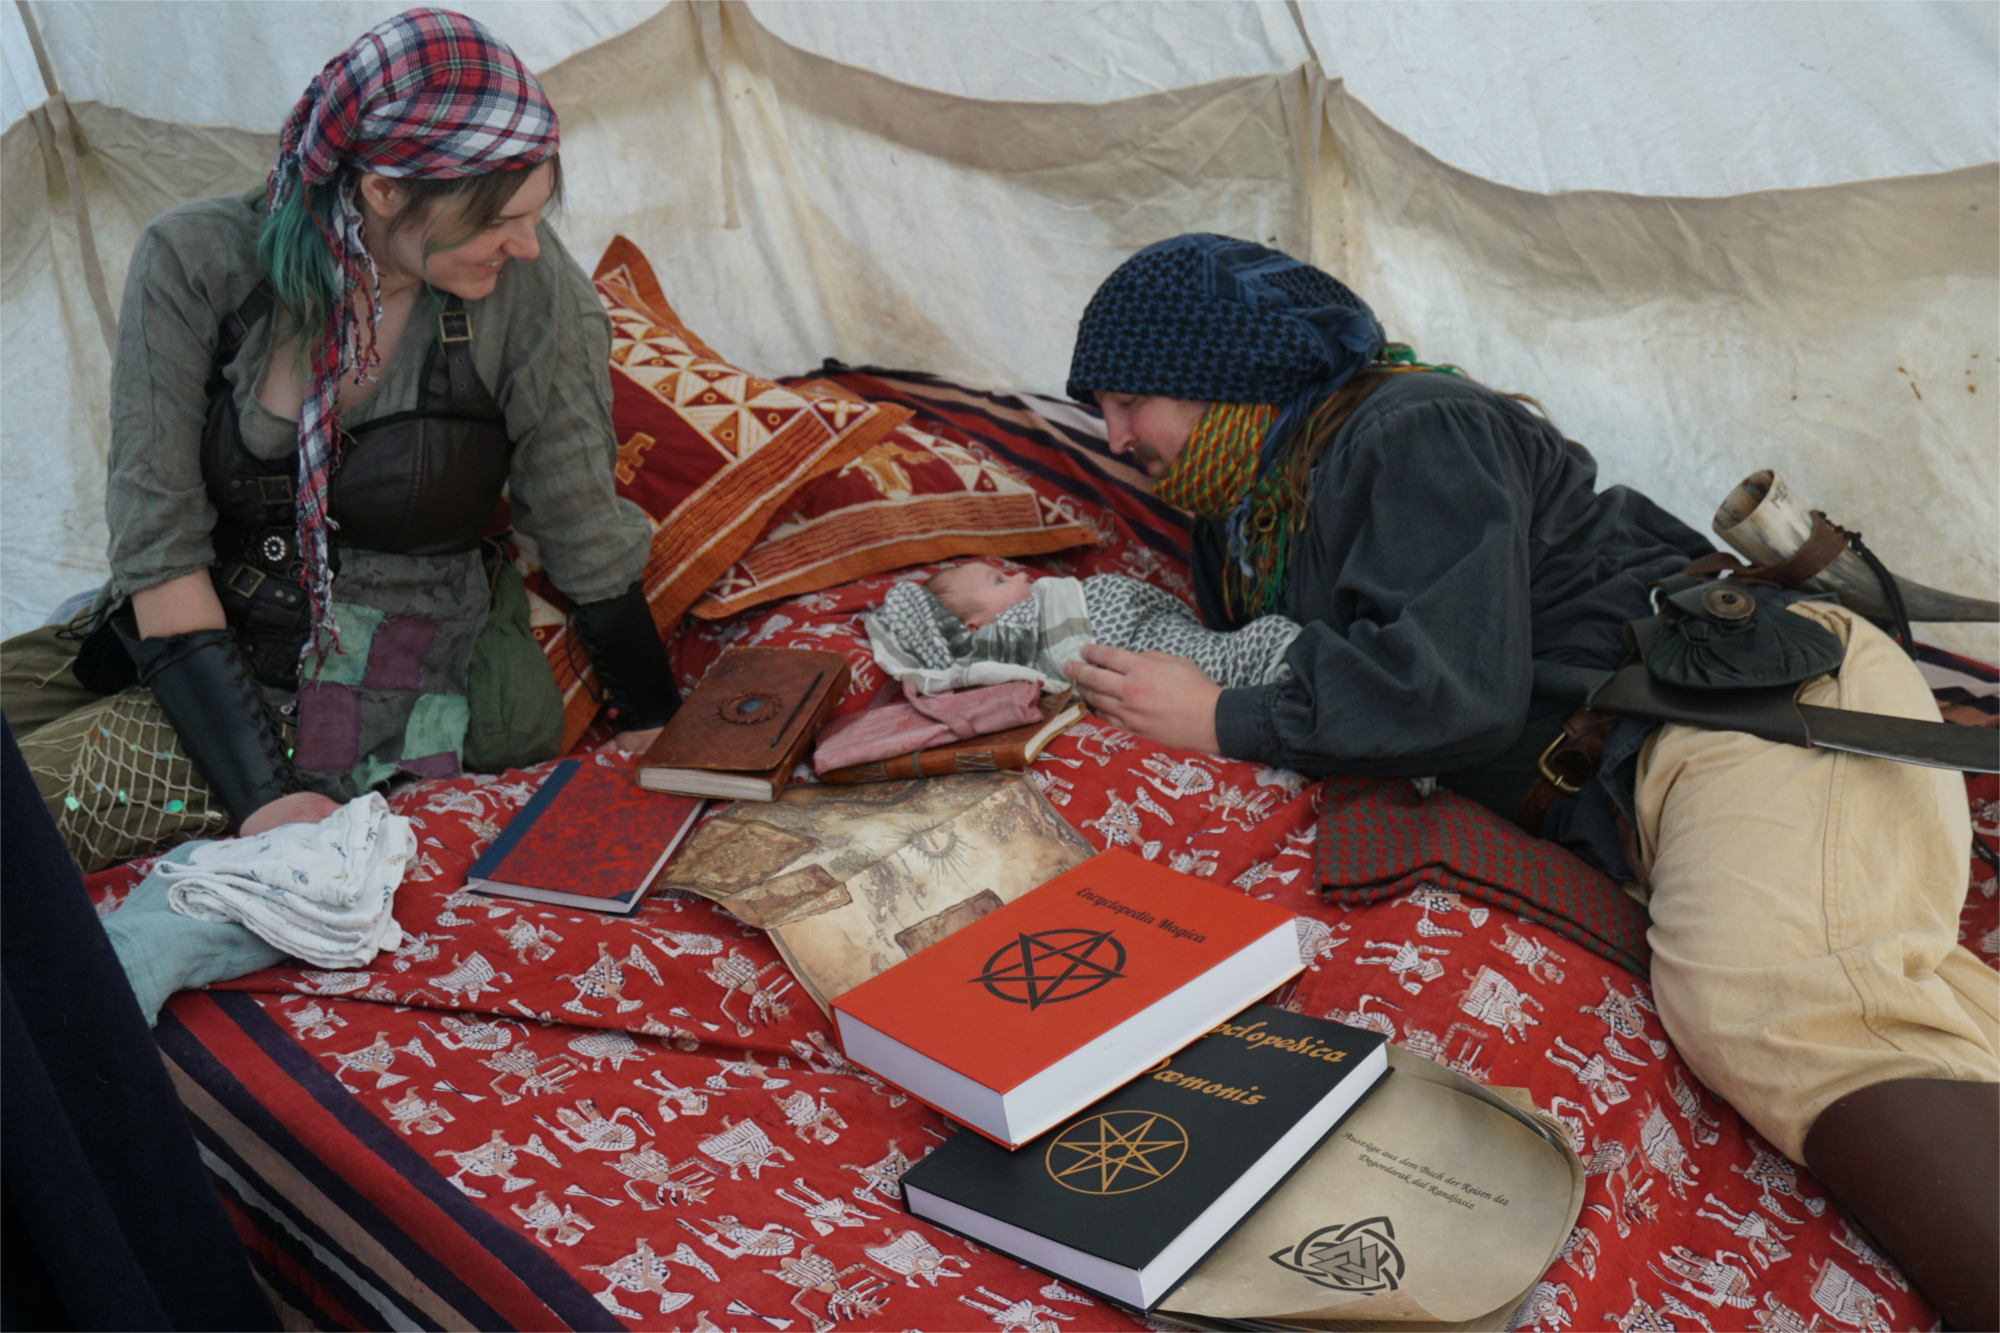 Carah, Tamara Anna & Degordarak in ihrem Zelt